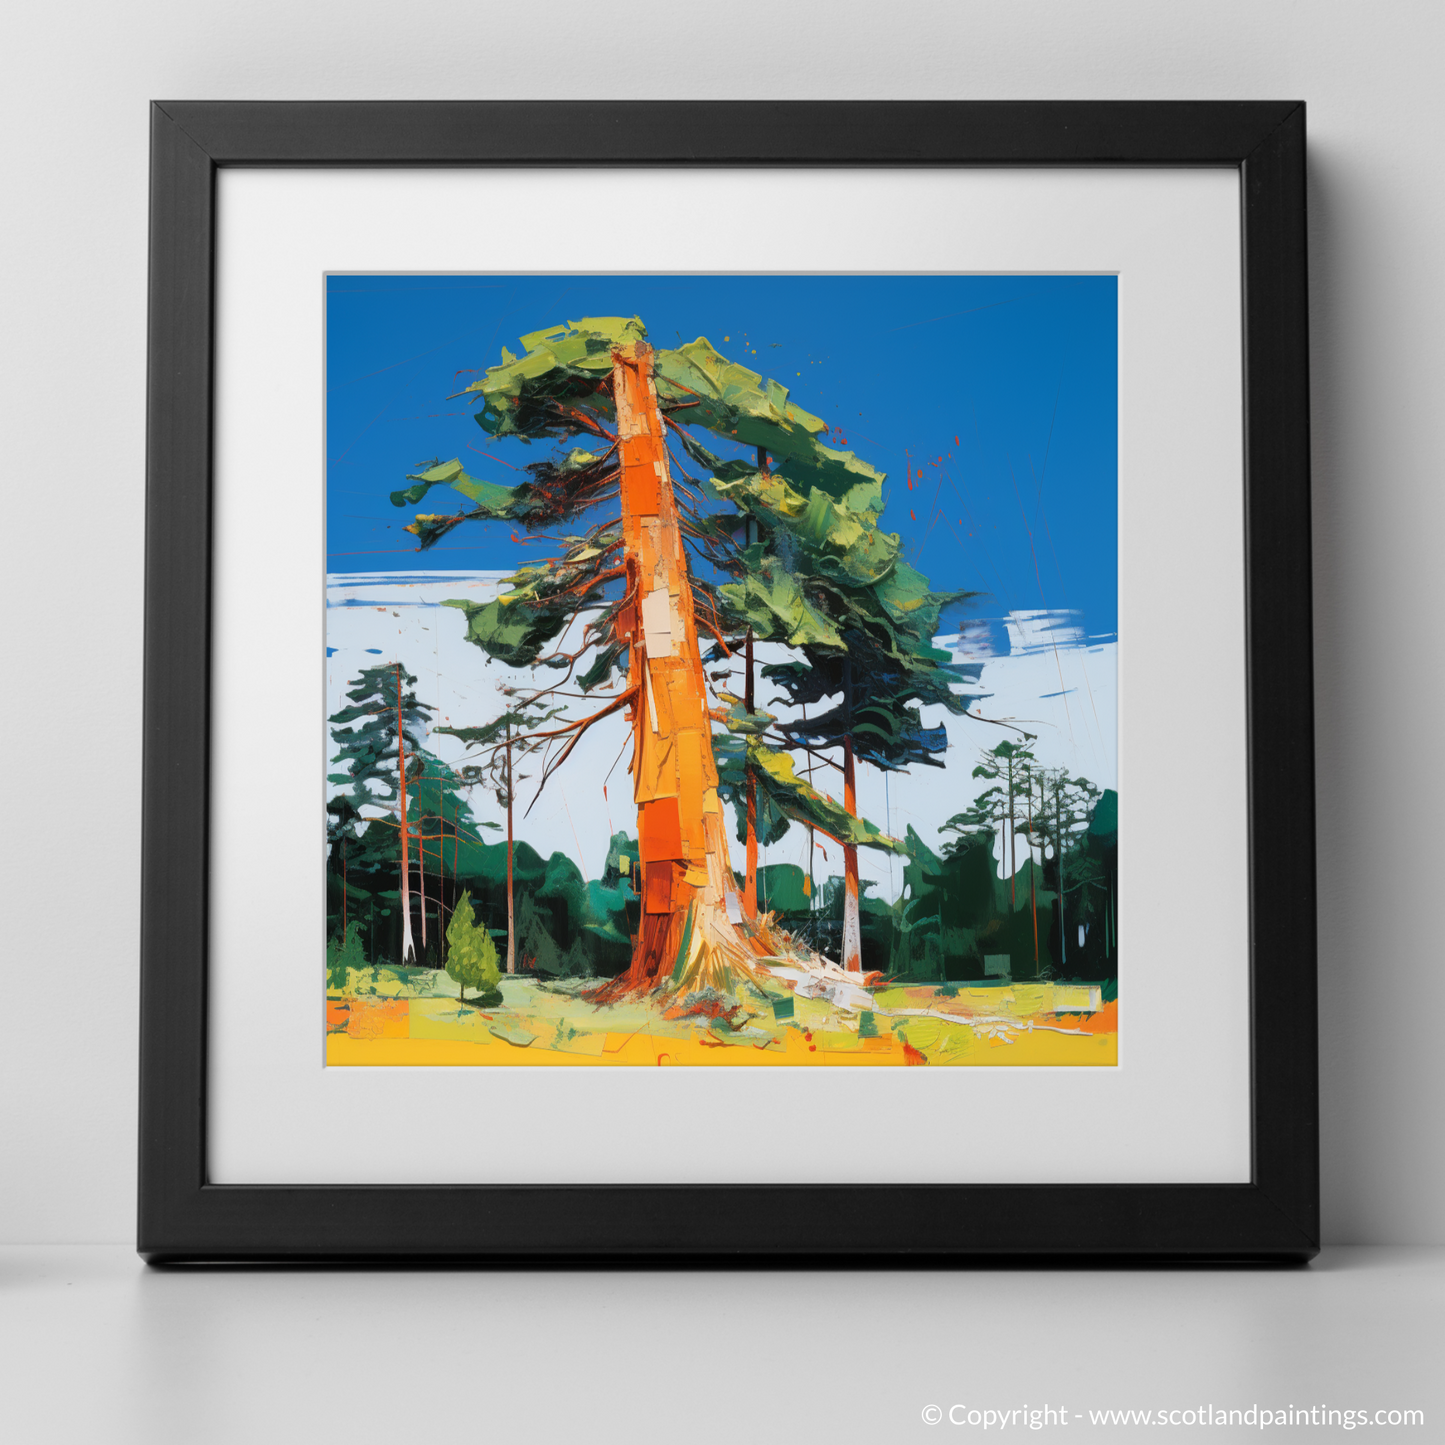 Vibrant Pines of Rothiemurchus: A Pop Art Tribute